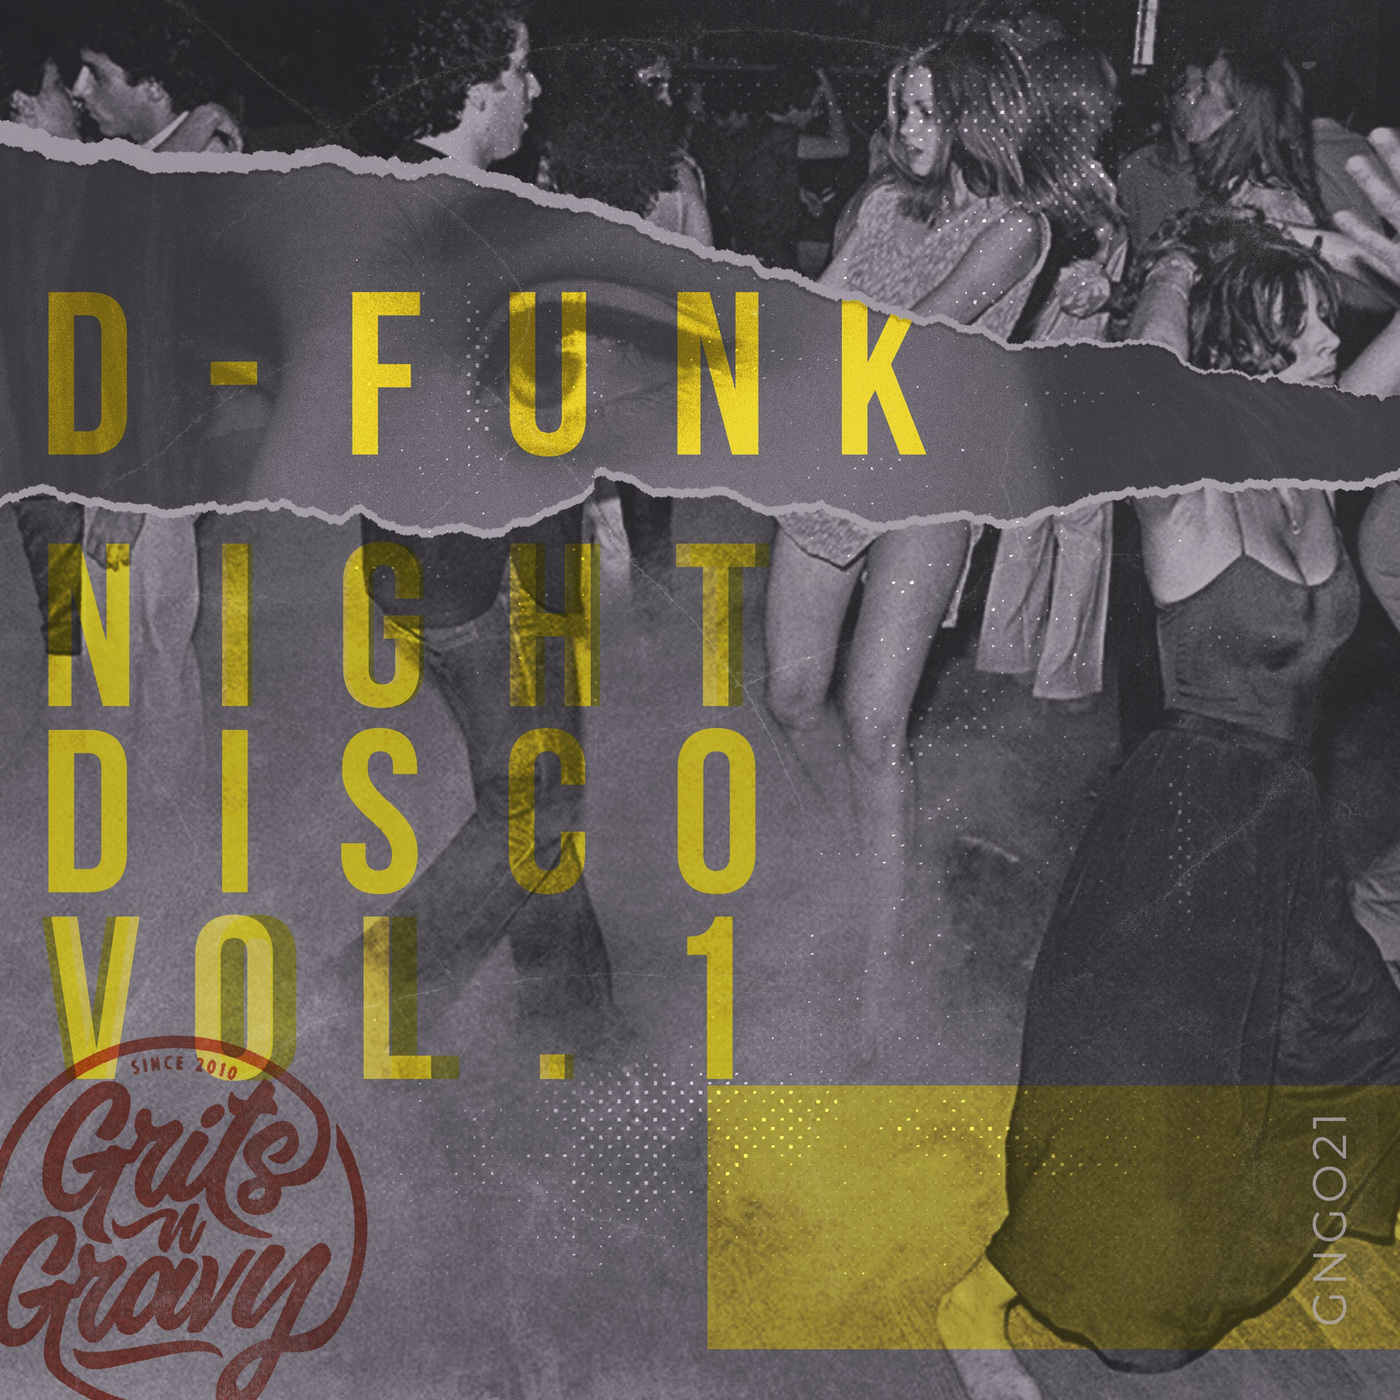 D-Funk - Night Disco, Vol. 1 / Grits N Gravy